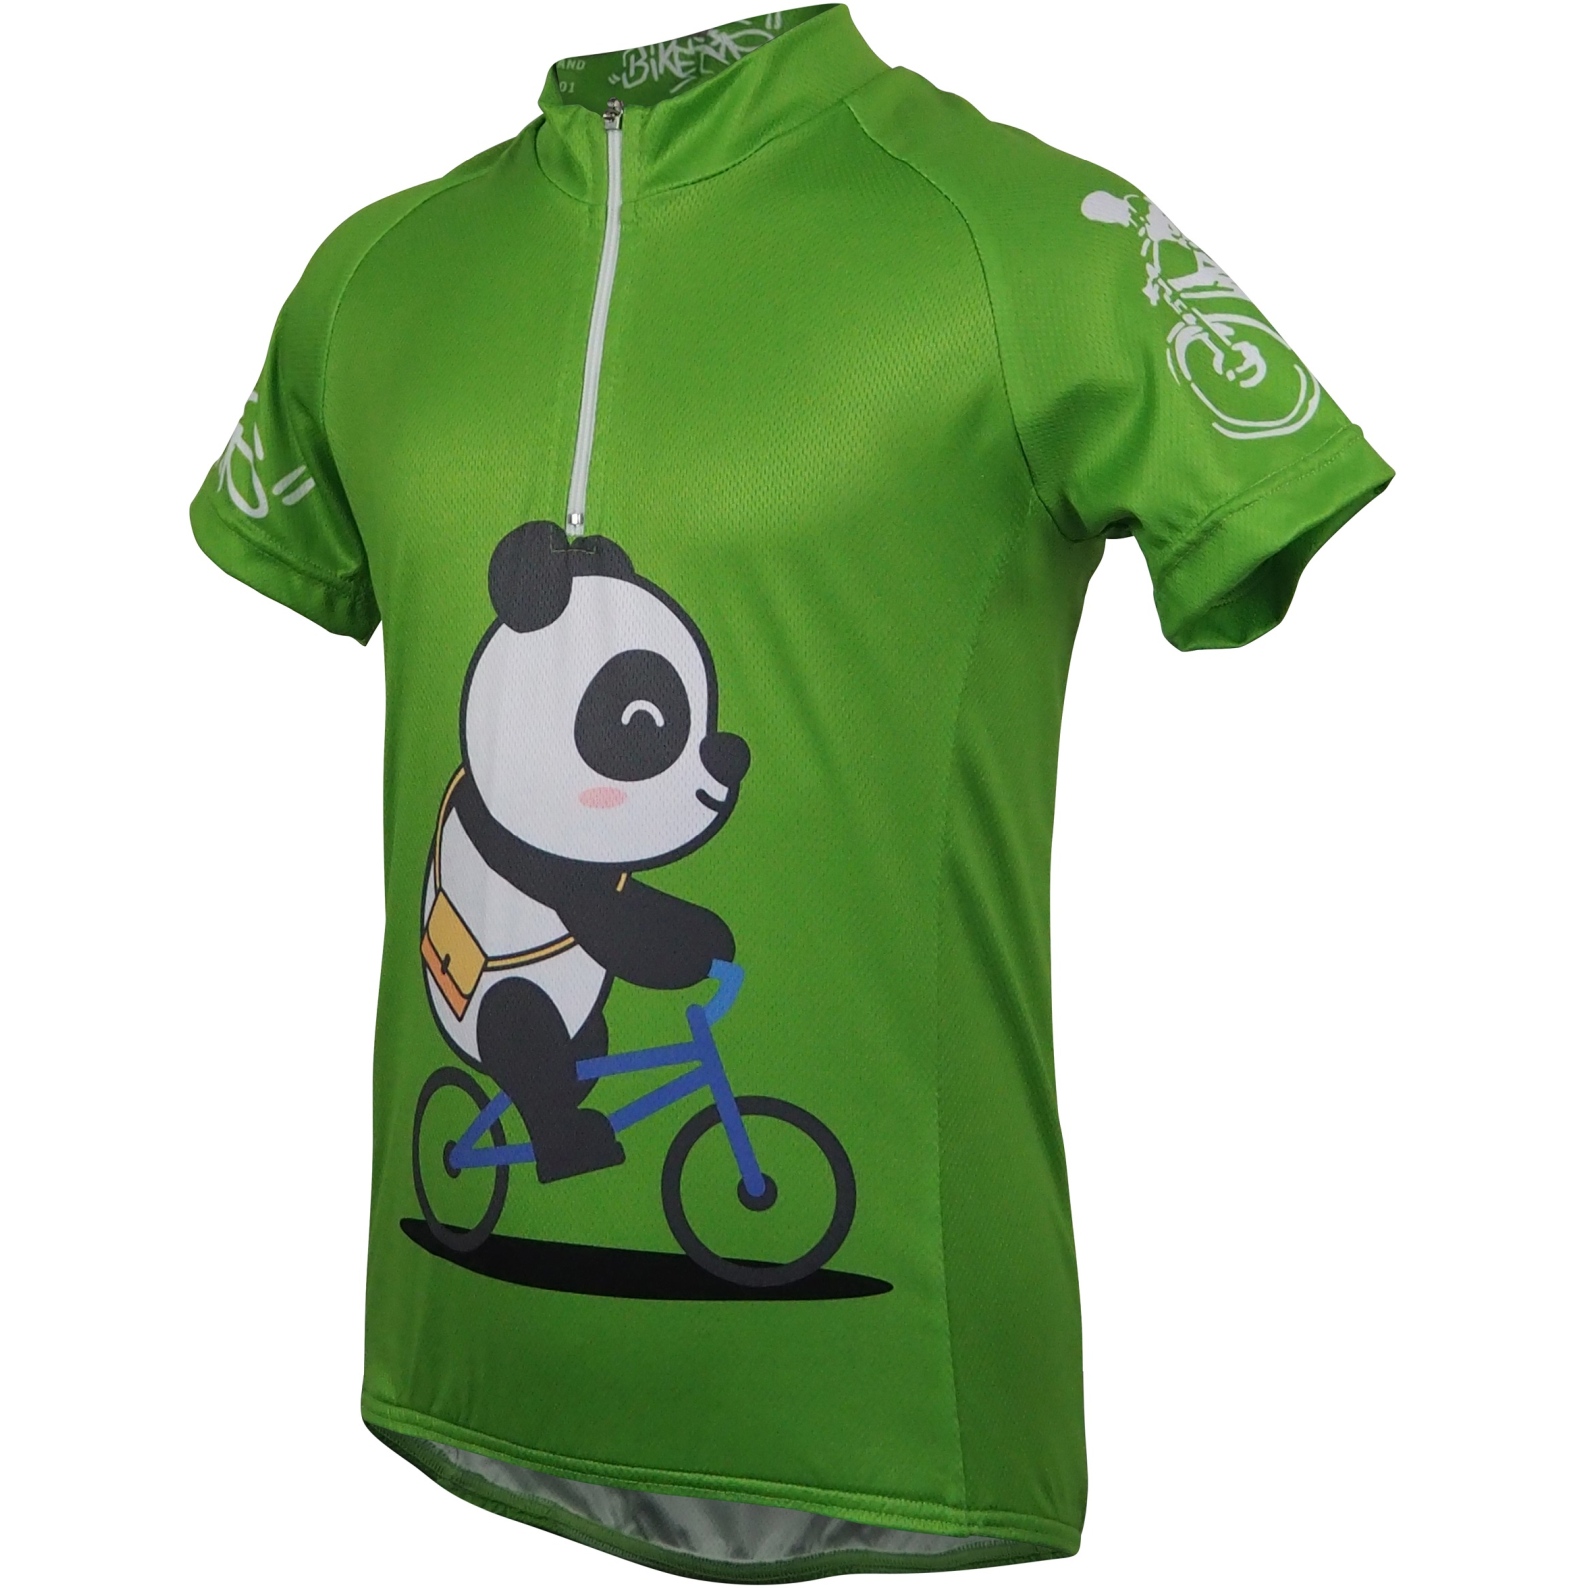 Picture of Biketags Cycling Jersey Kids - Panda Green